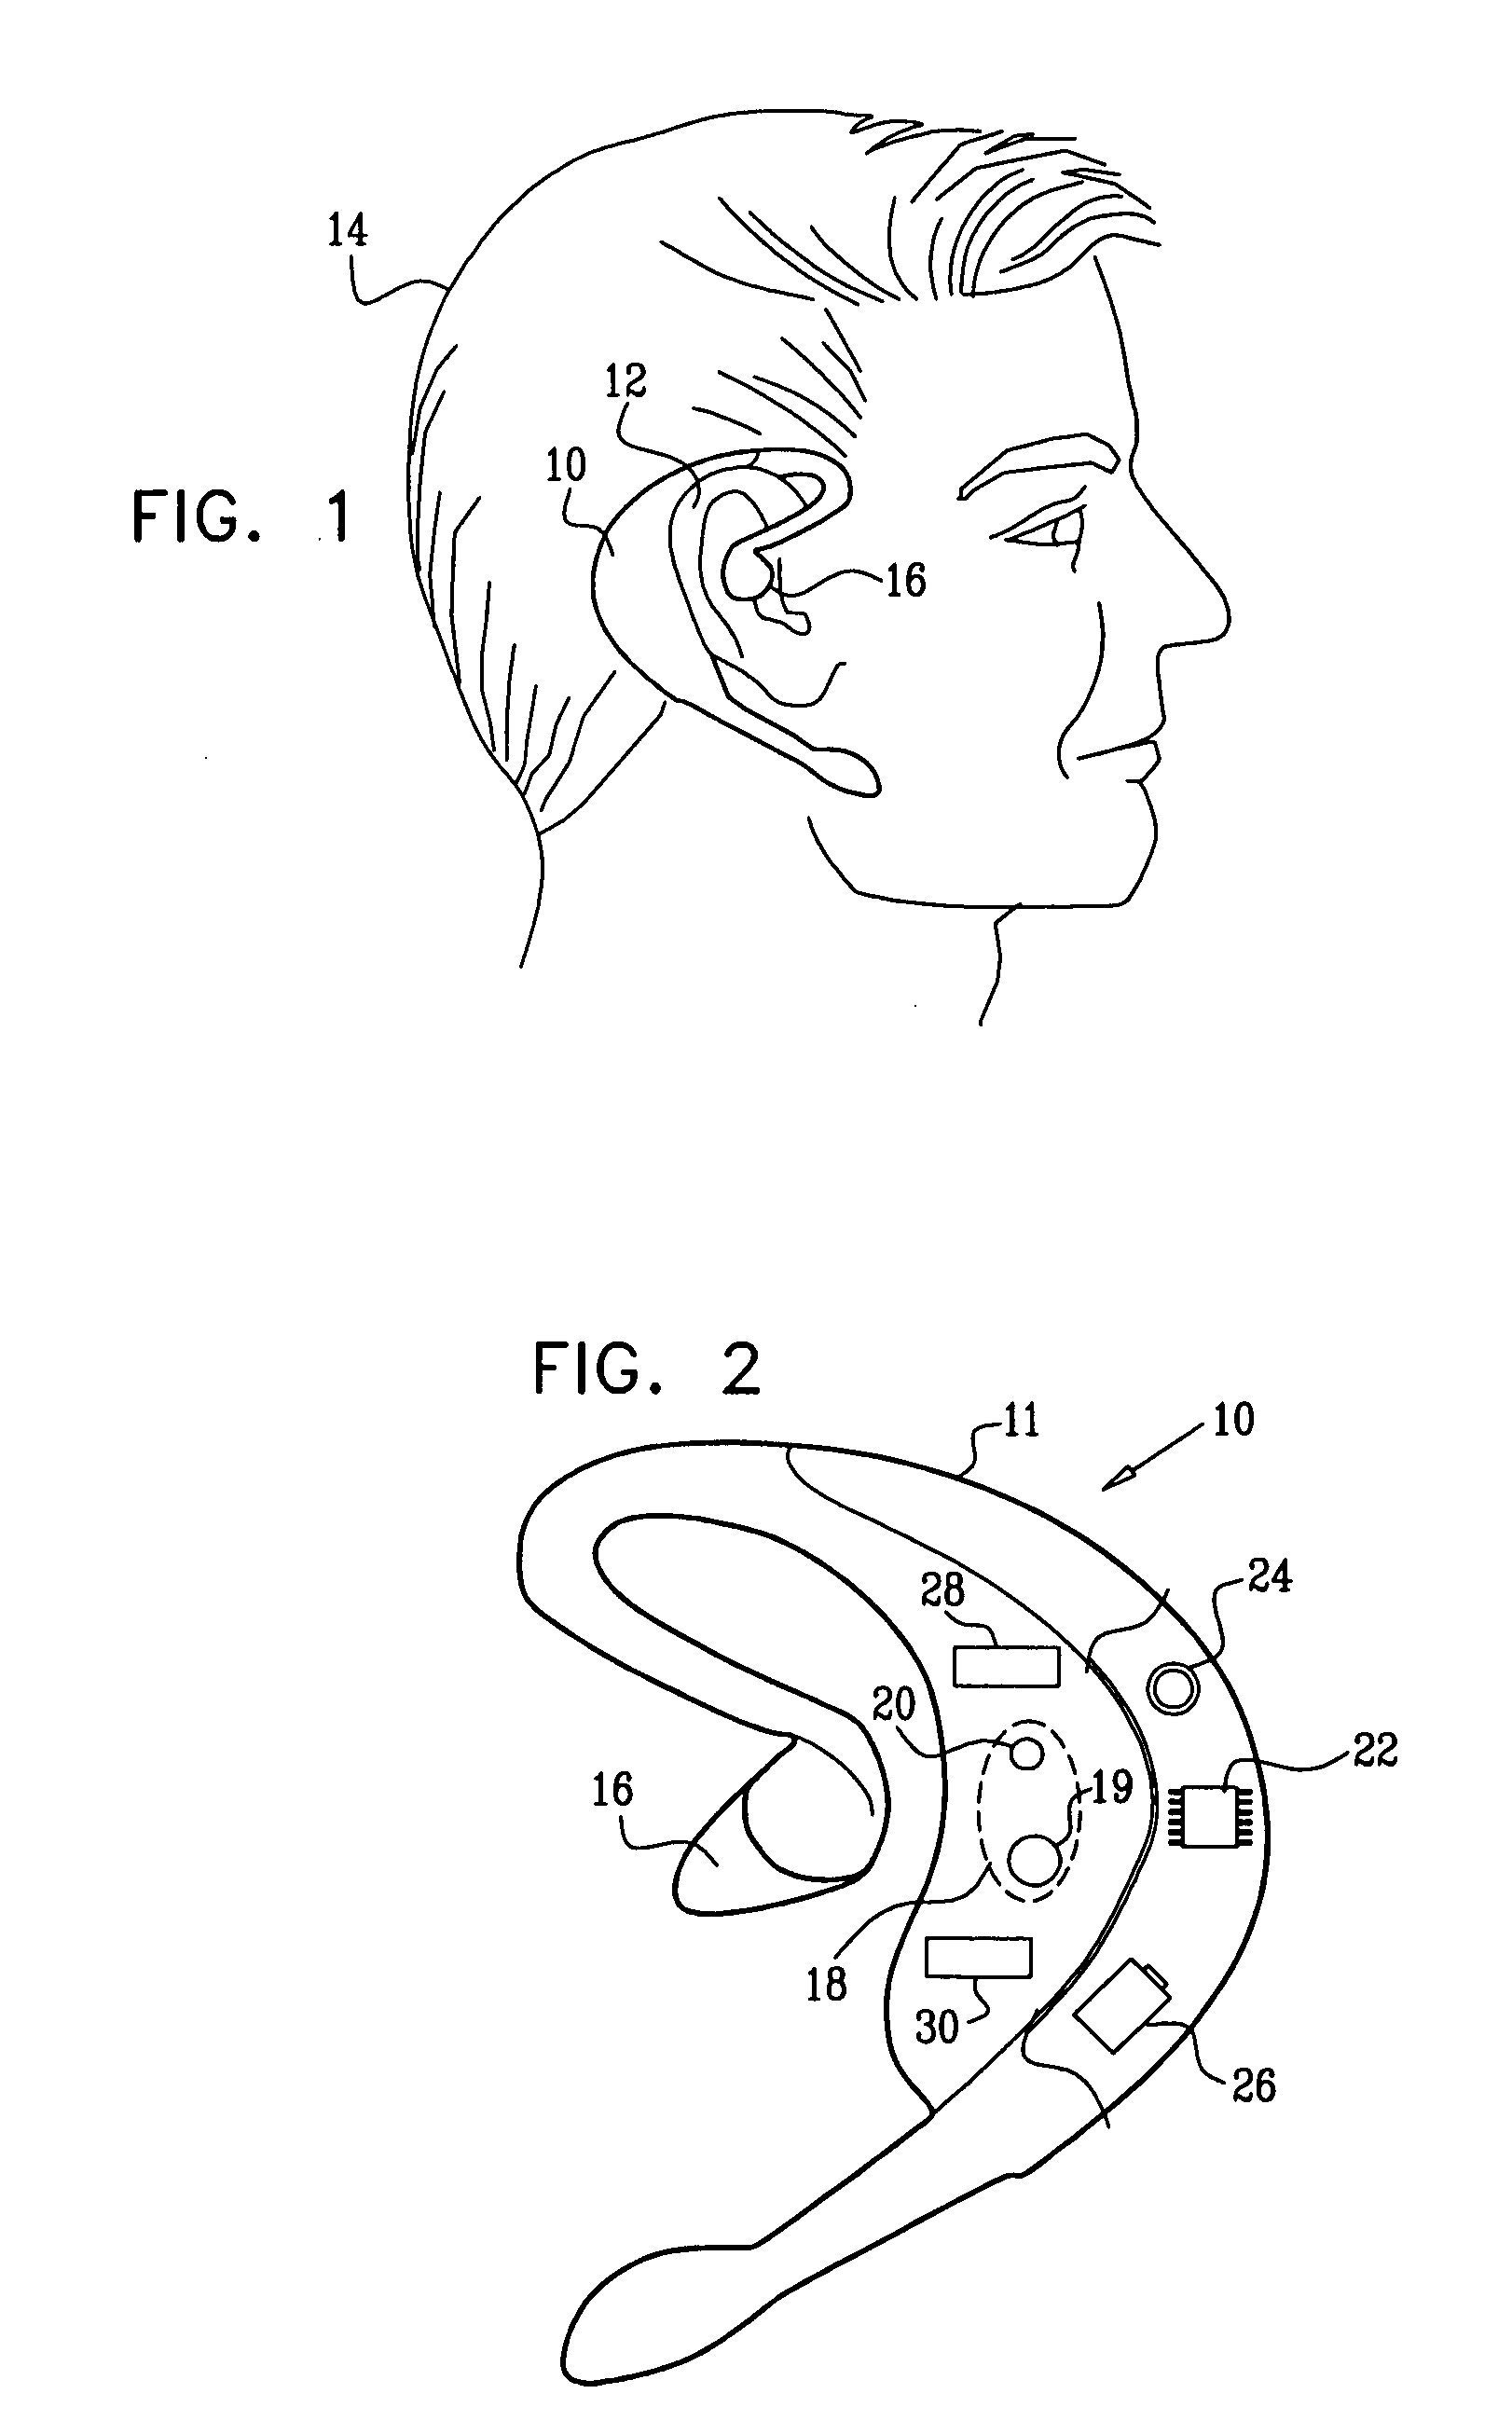 Ear-mounted biosensor